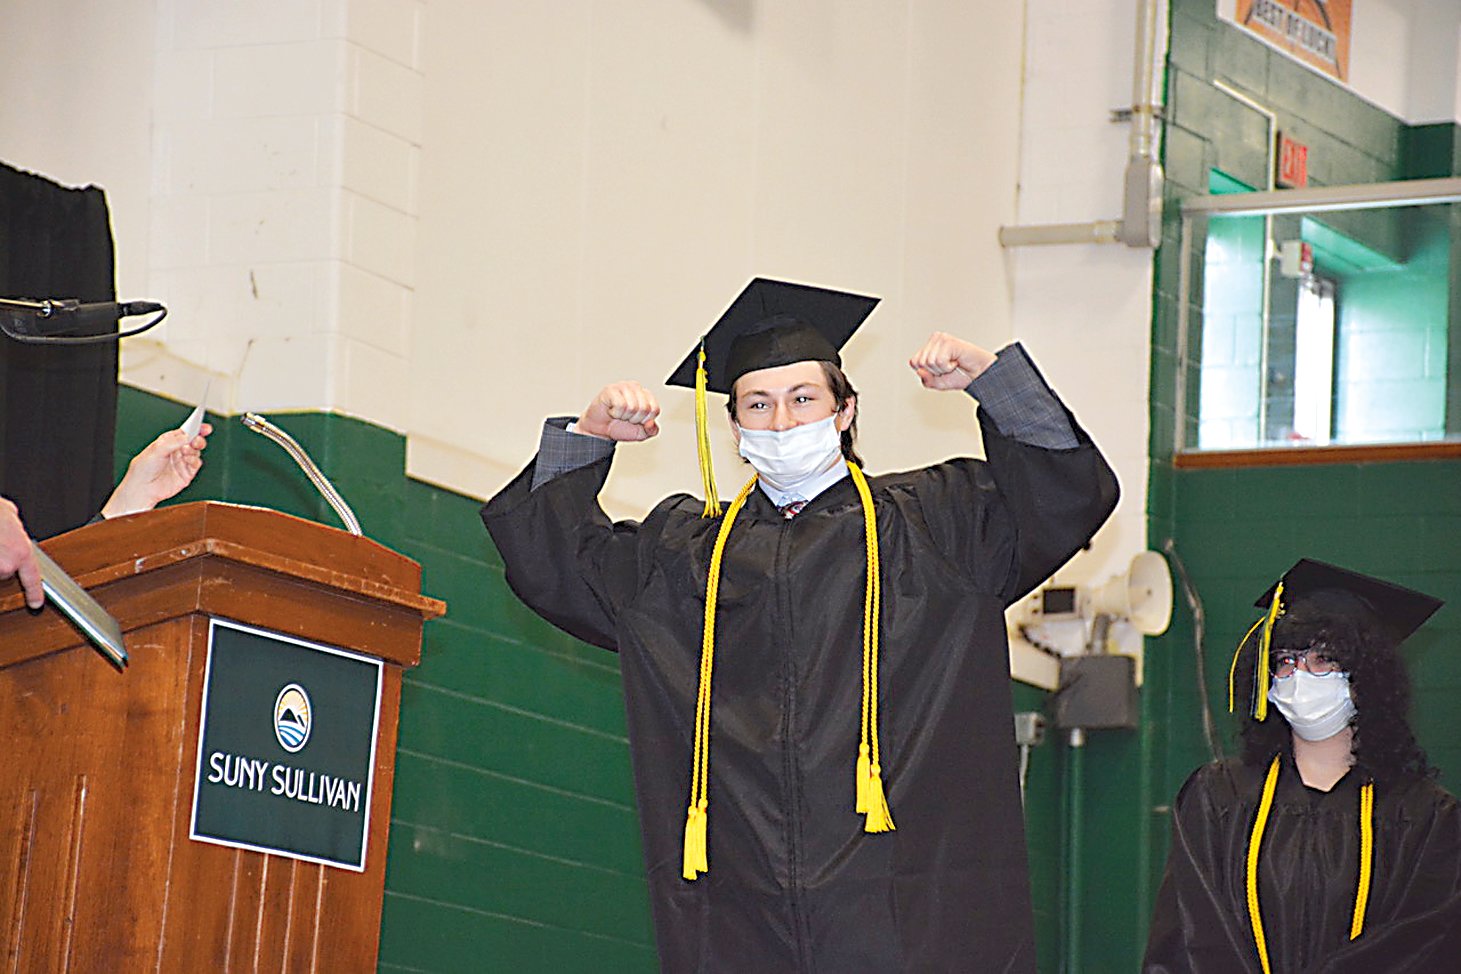 SUNY Sullivan wrestler Liam Bullock flexes across the podium en route to his diploma.